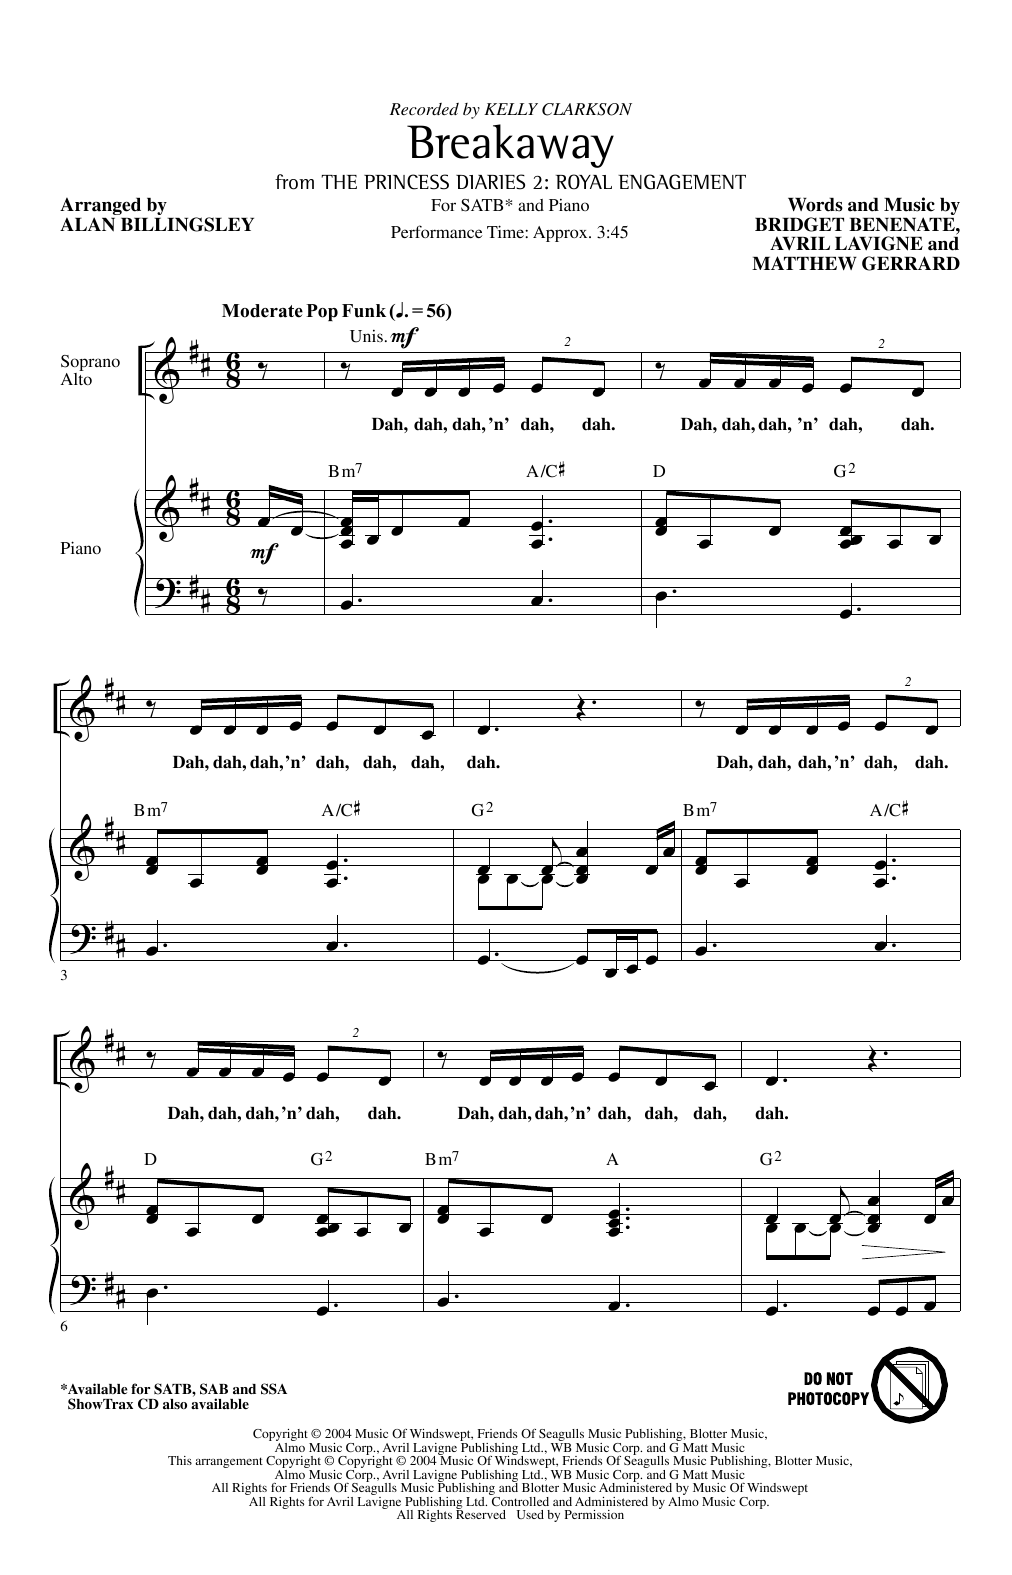 Kelly Clarkson Breakaway (arr. Alan Billingsley) Sheet Music Notes & Chords for SSA Choir - Download or Print PDF